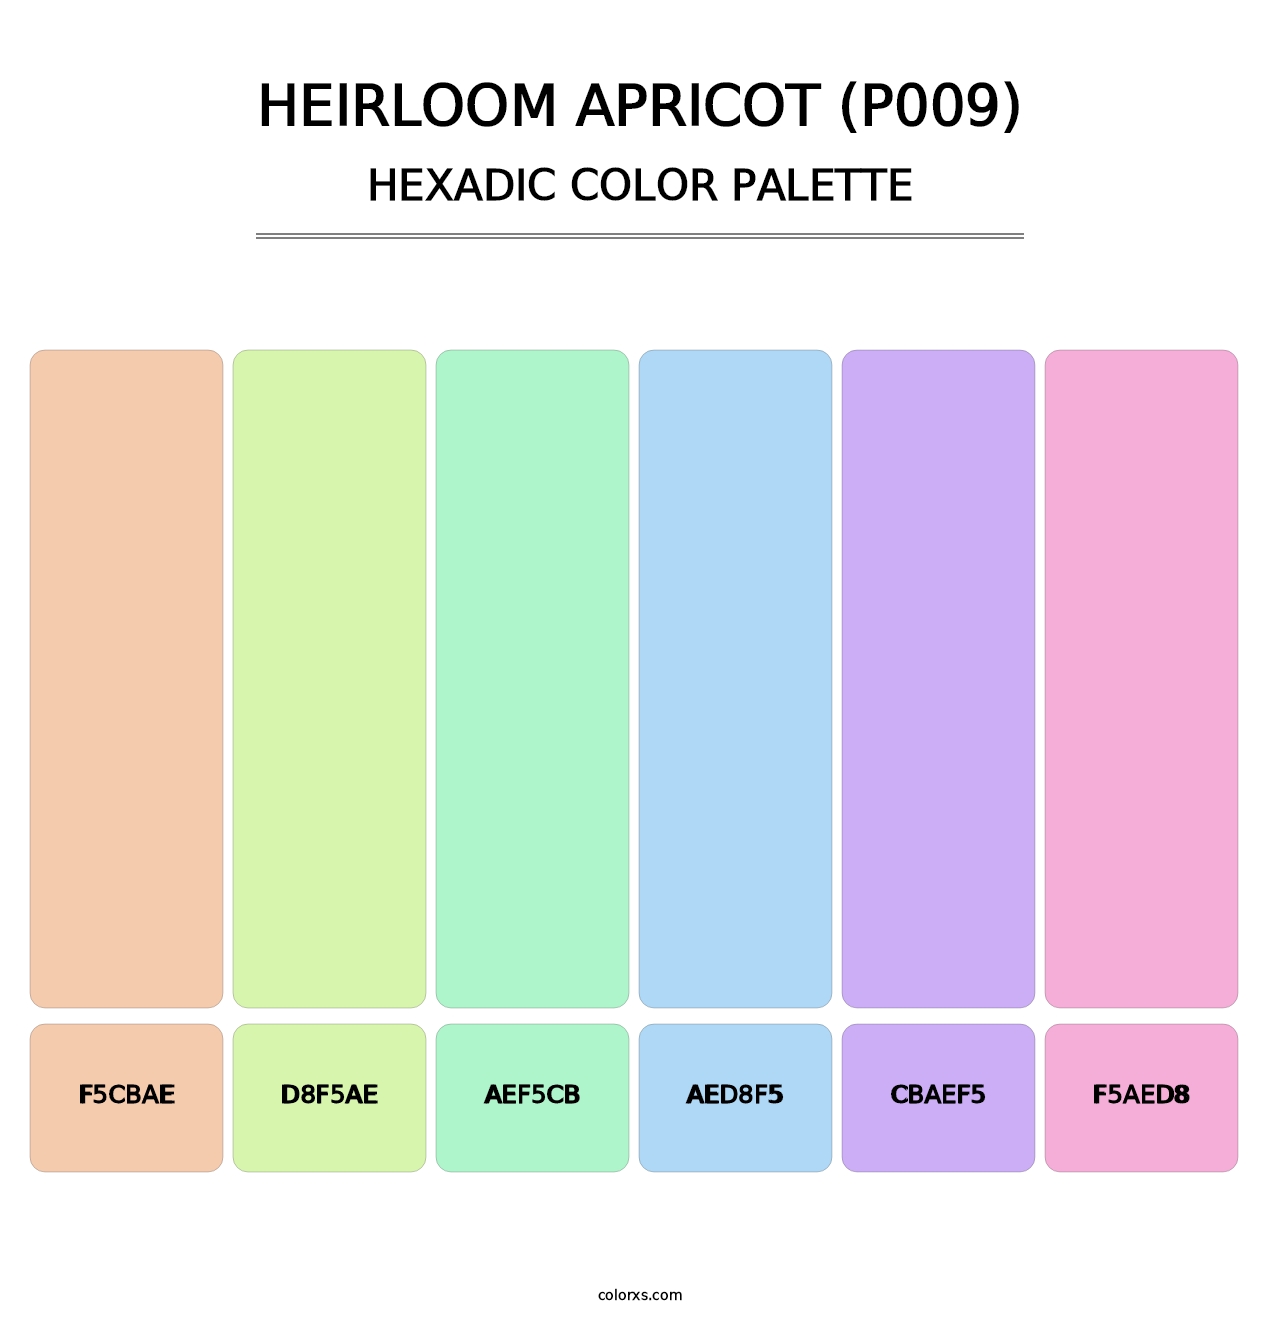 Heirloom Apricot (P009) - Hexadic Color Palette